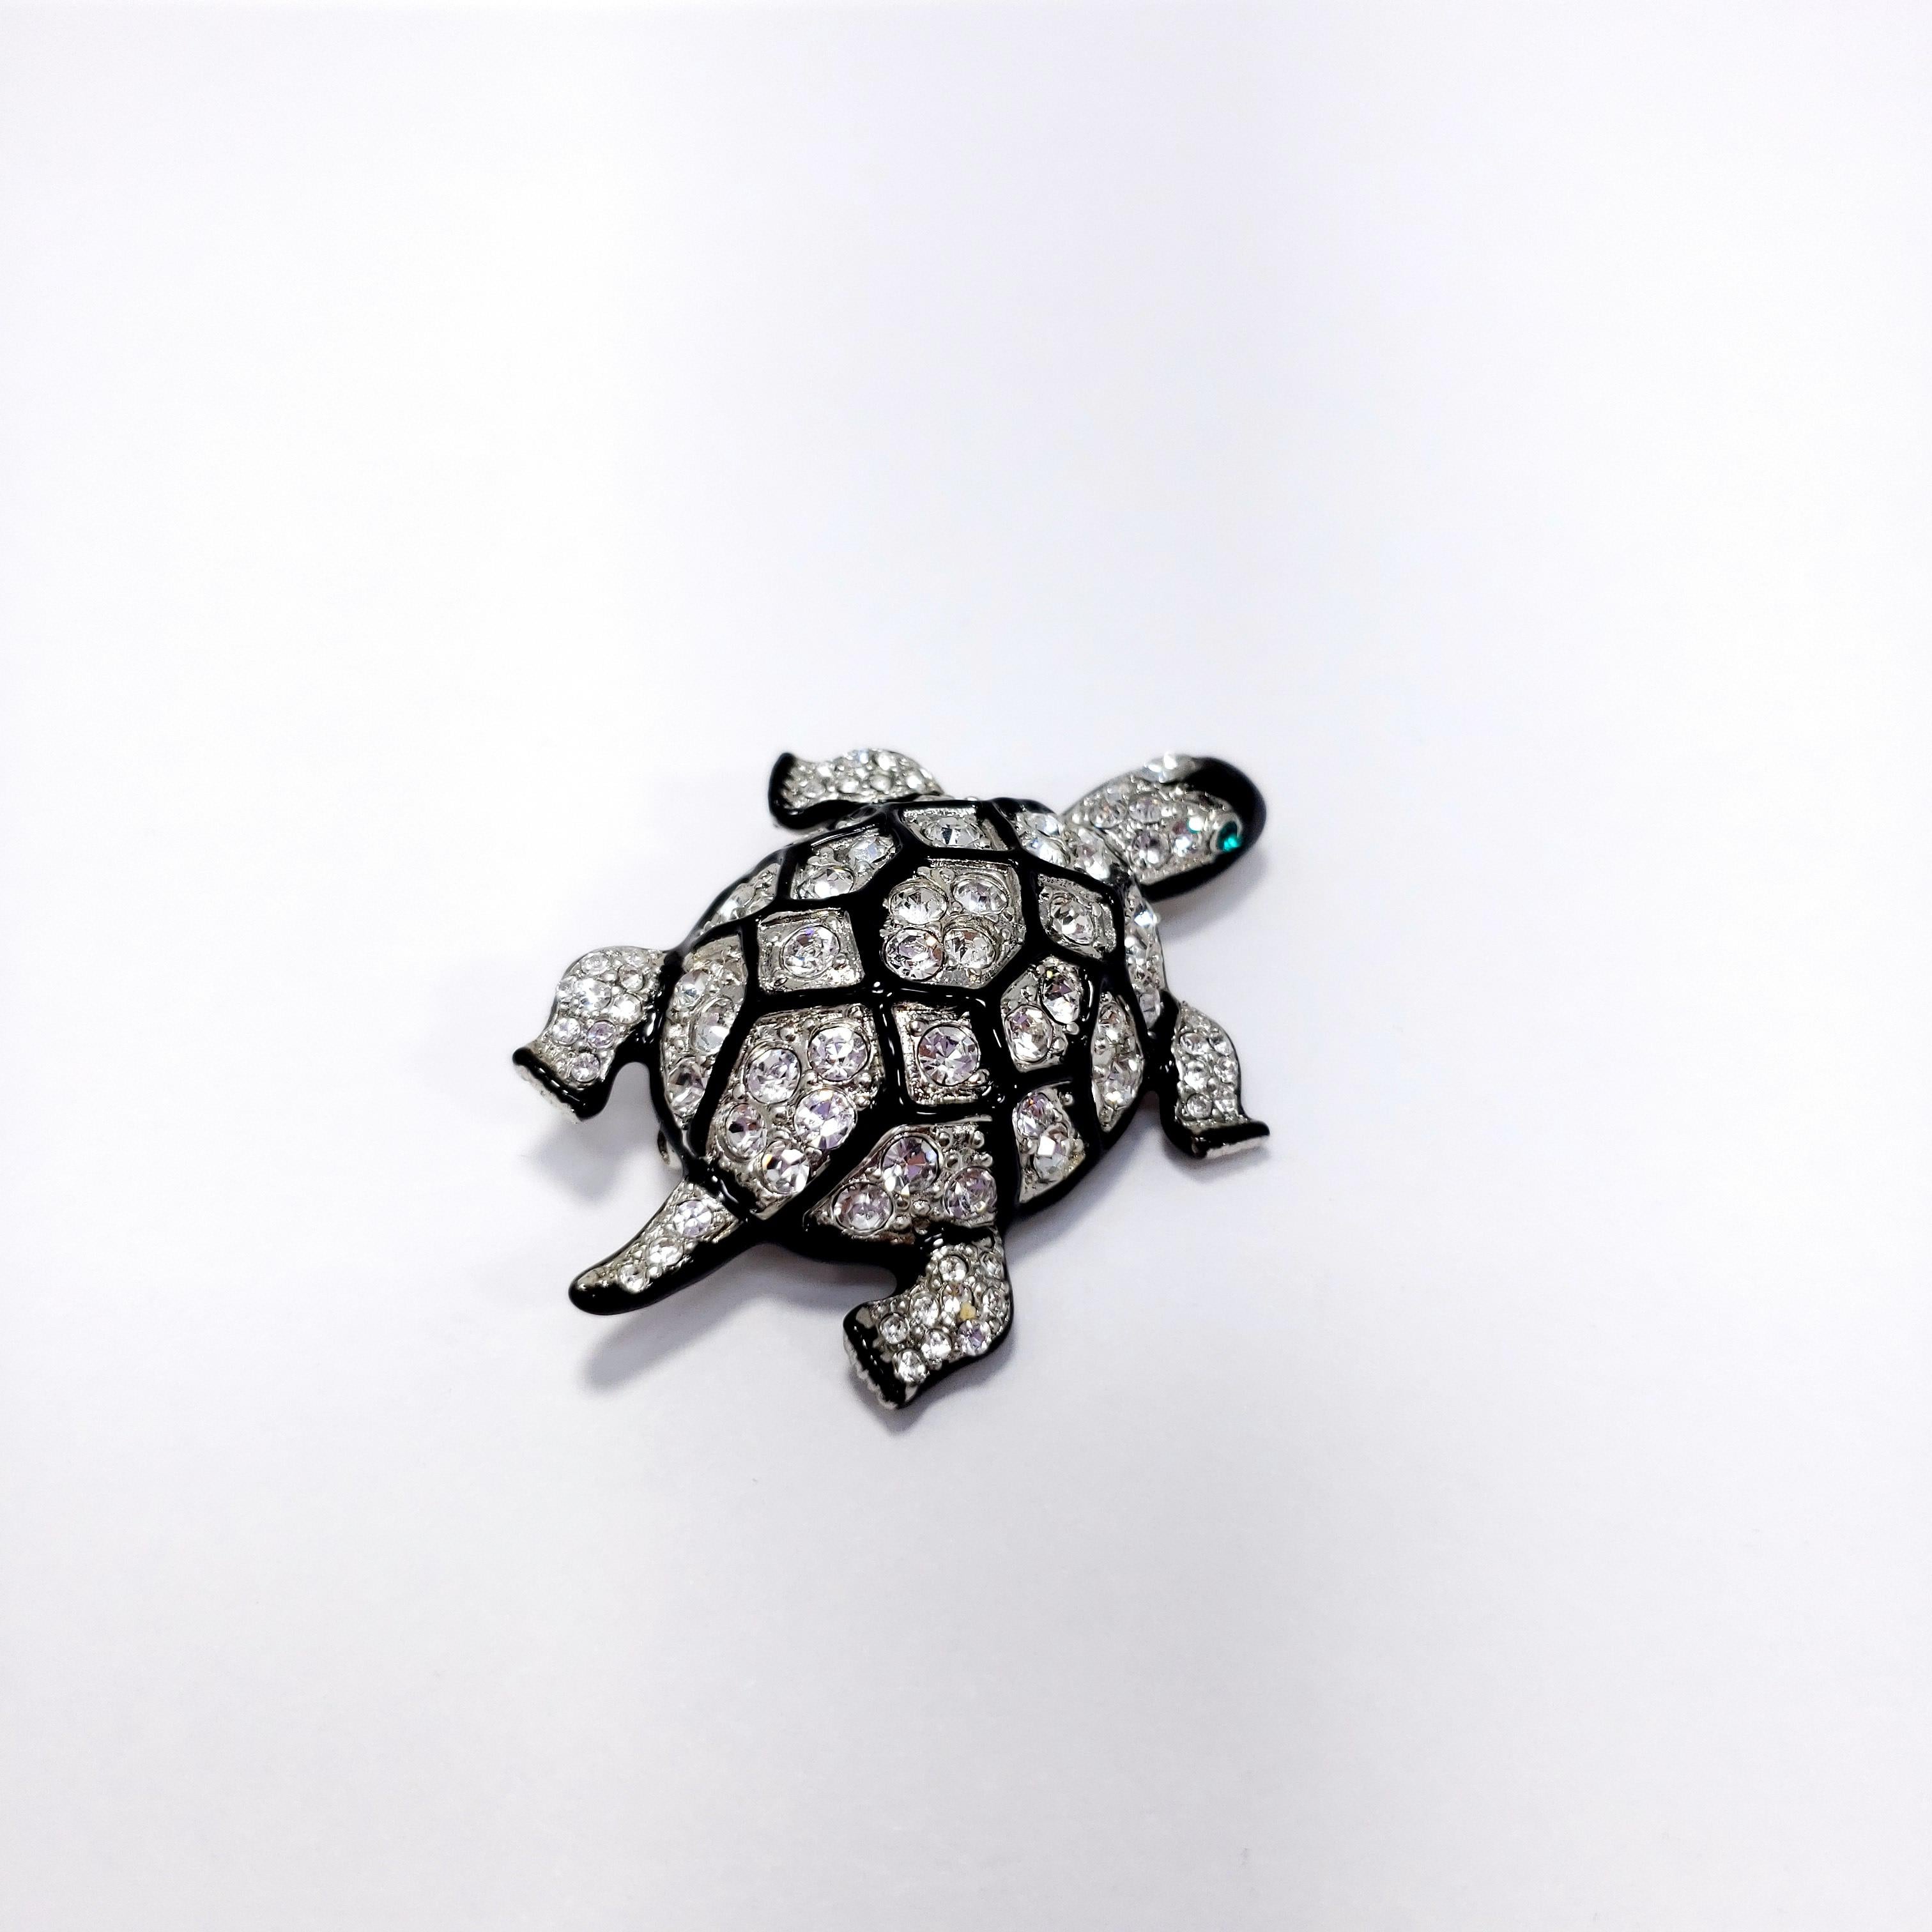 KJL Kenneth Jay Lane Embellished Pave Crystal Turtle Silver Brooch, Black Enamel In New Condition For Sale In Milford, DE